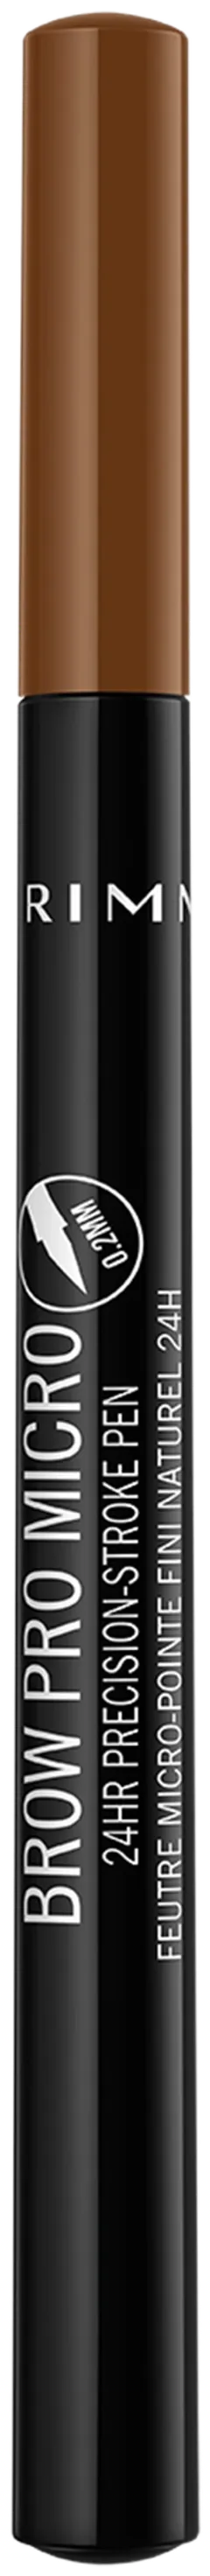 Rimmel Brow Pro 24HR Precision-Stroke kulmakynä 1 ml, 002 Honey Brown - 2